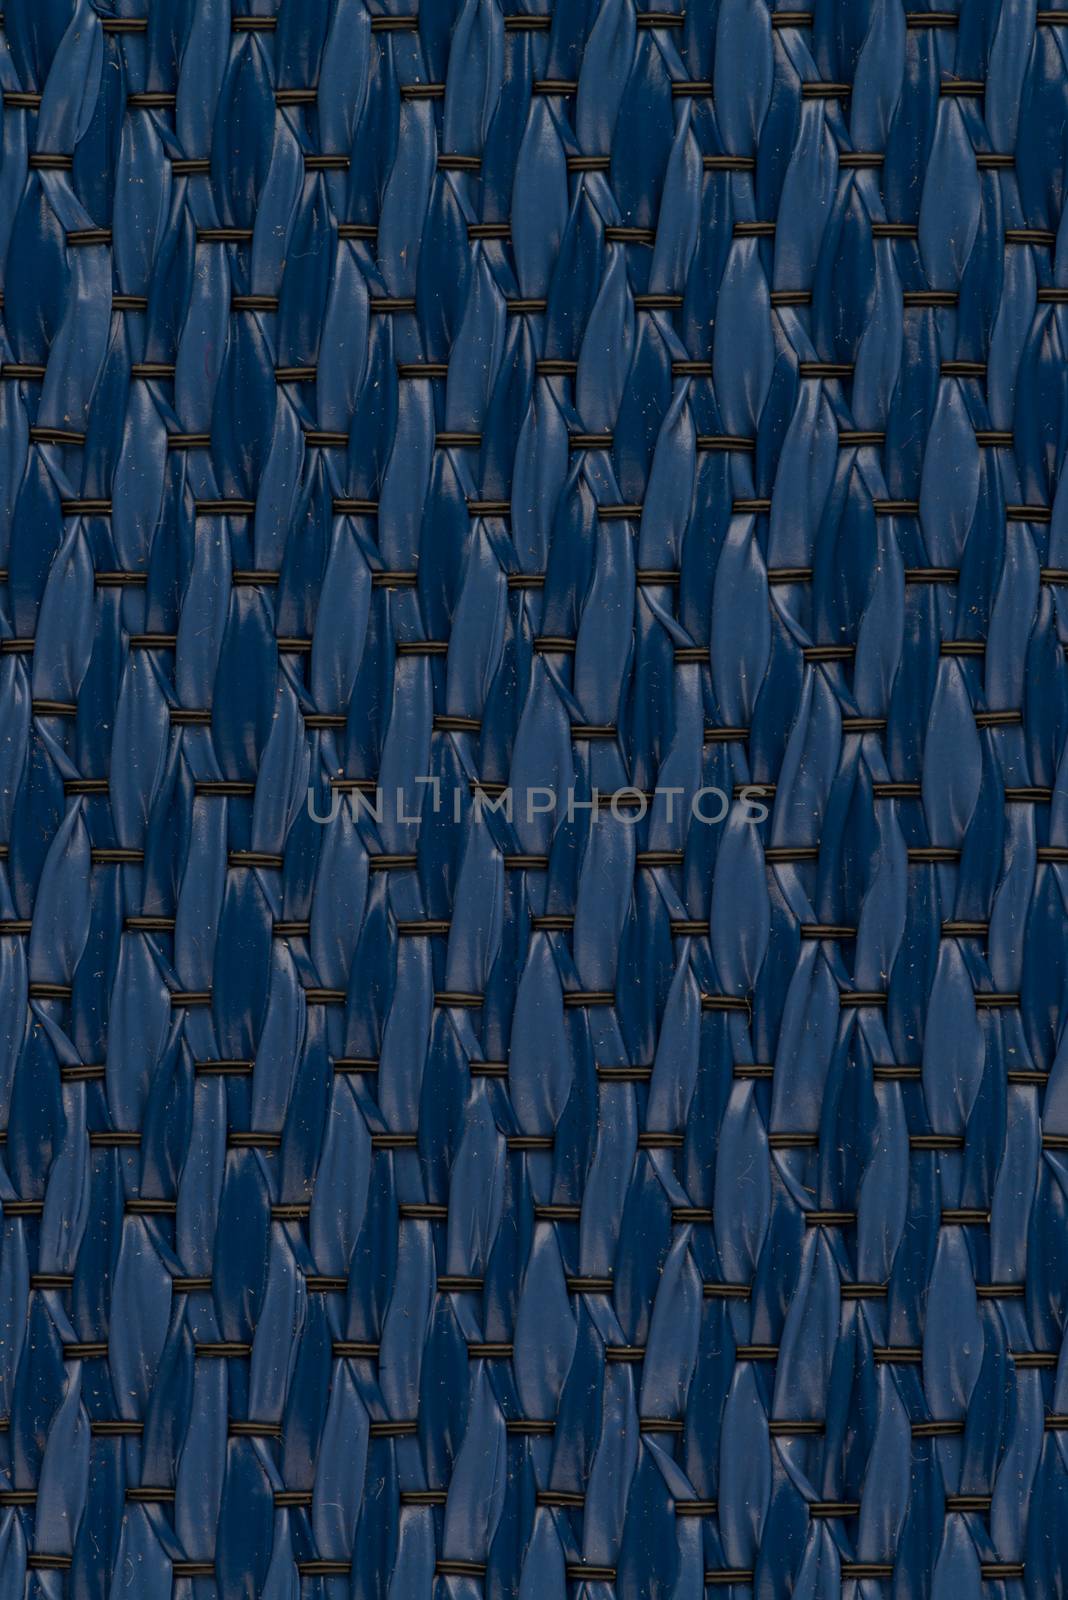 Blue vinyl texture by homydesign